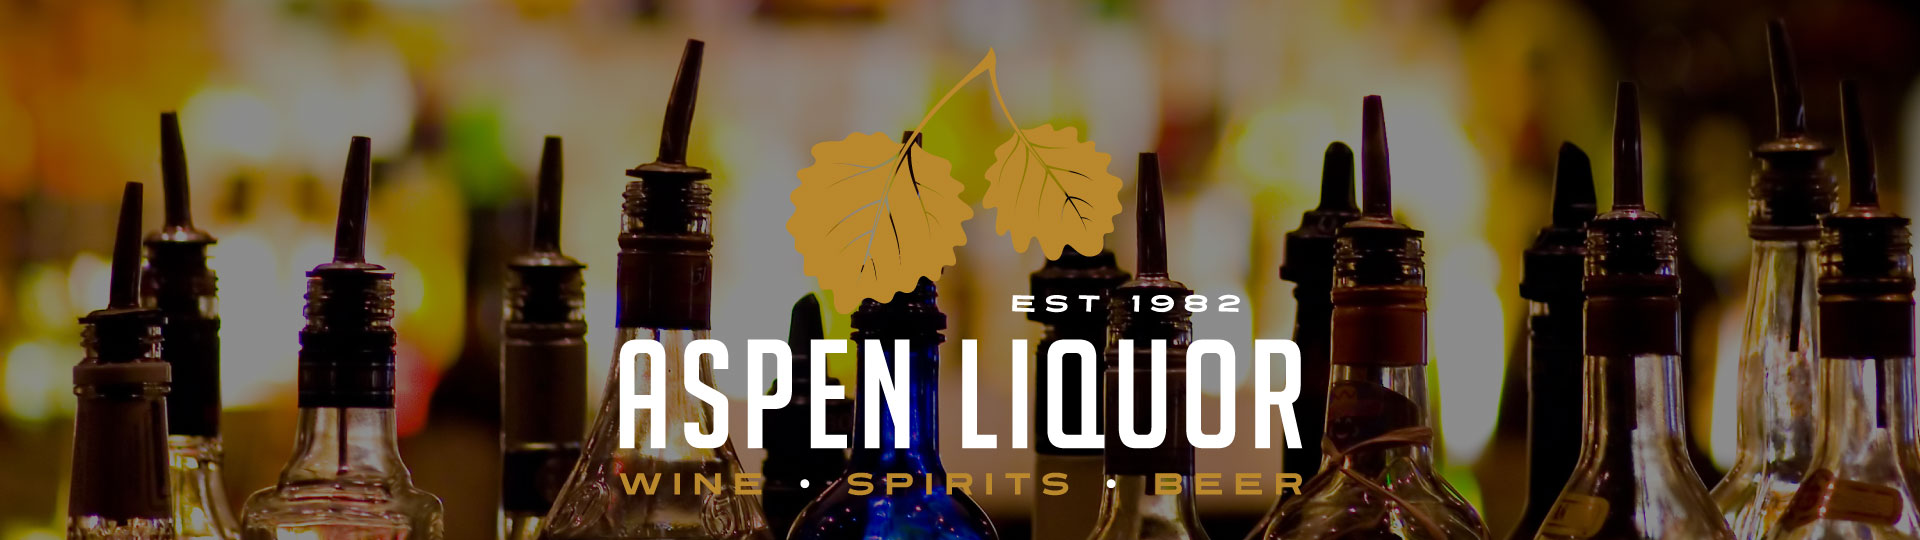 Aspen Liquor